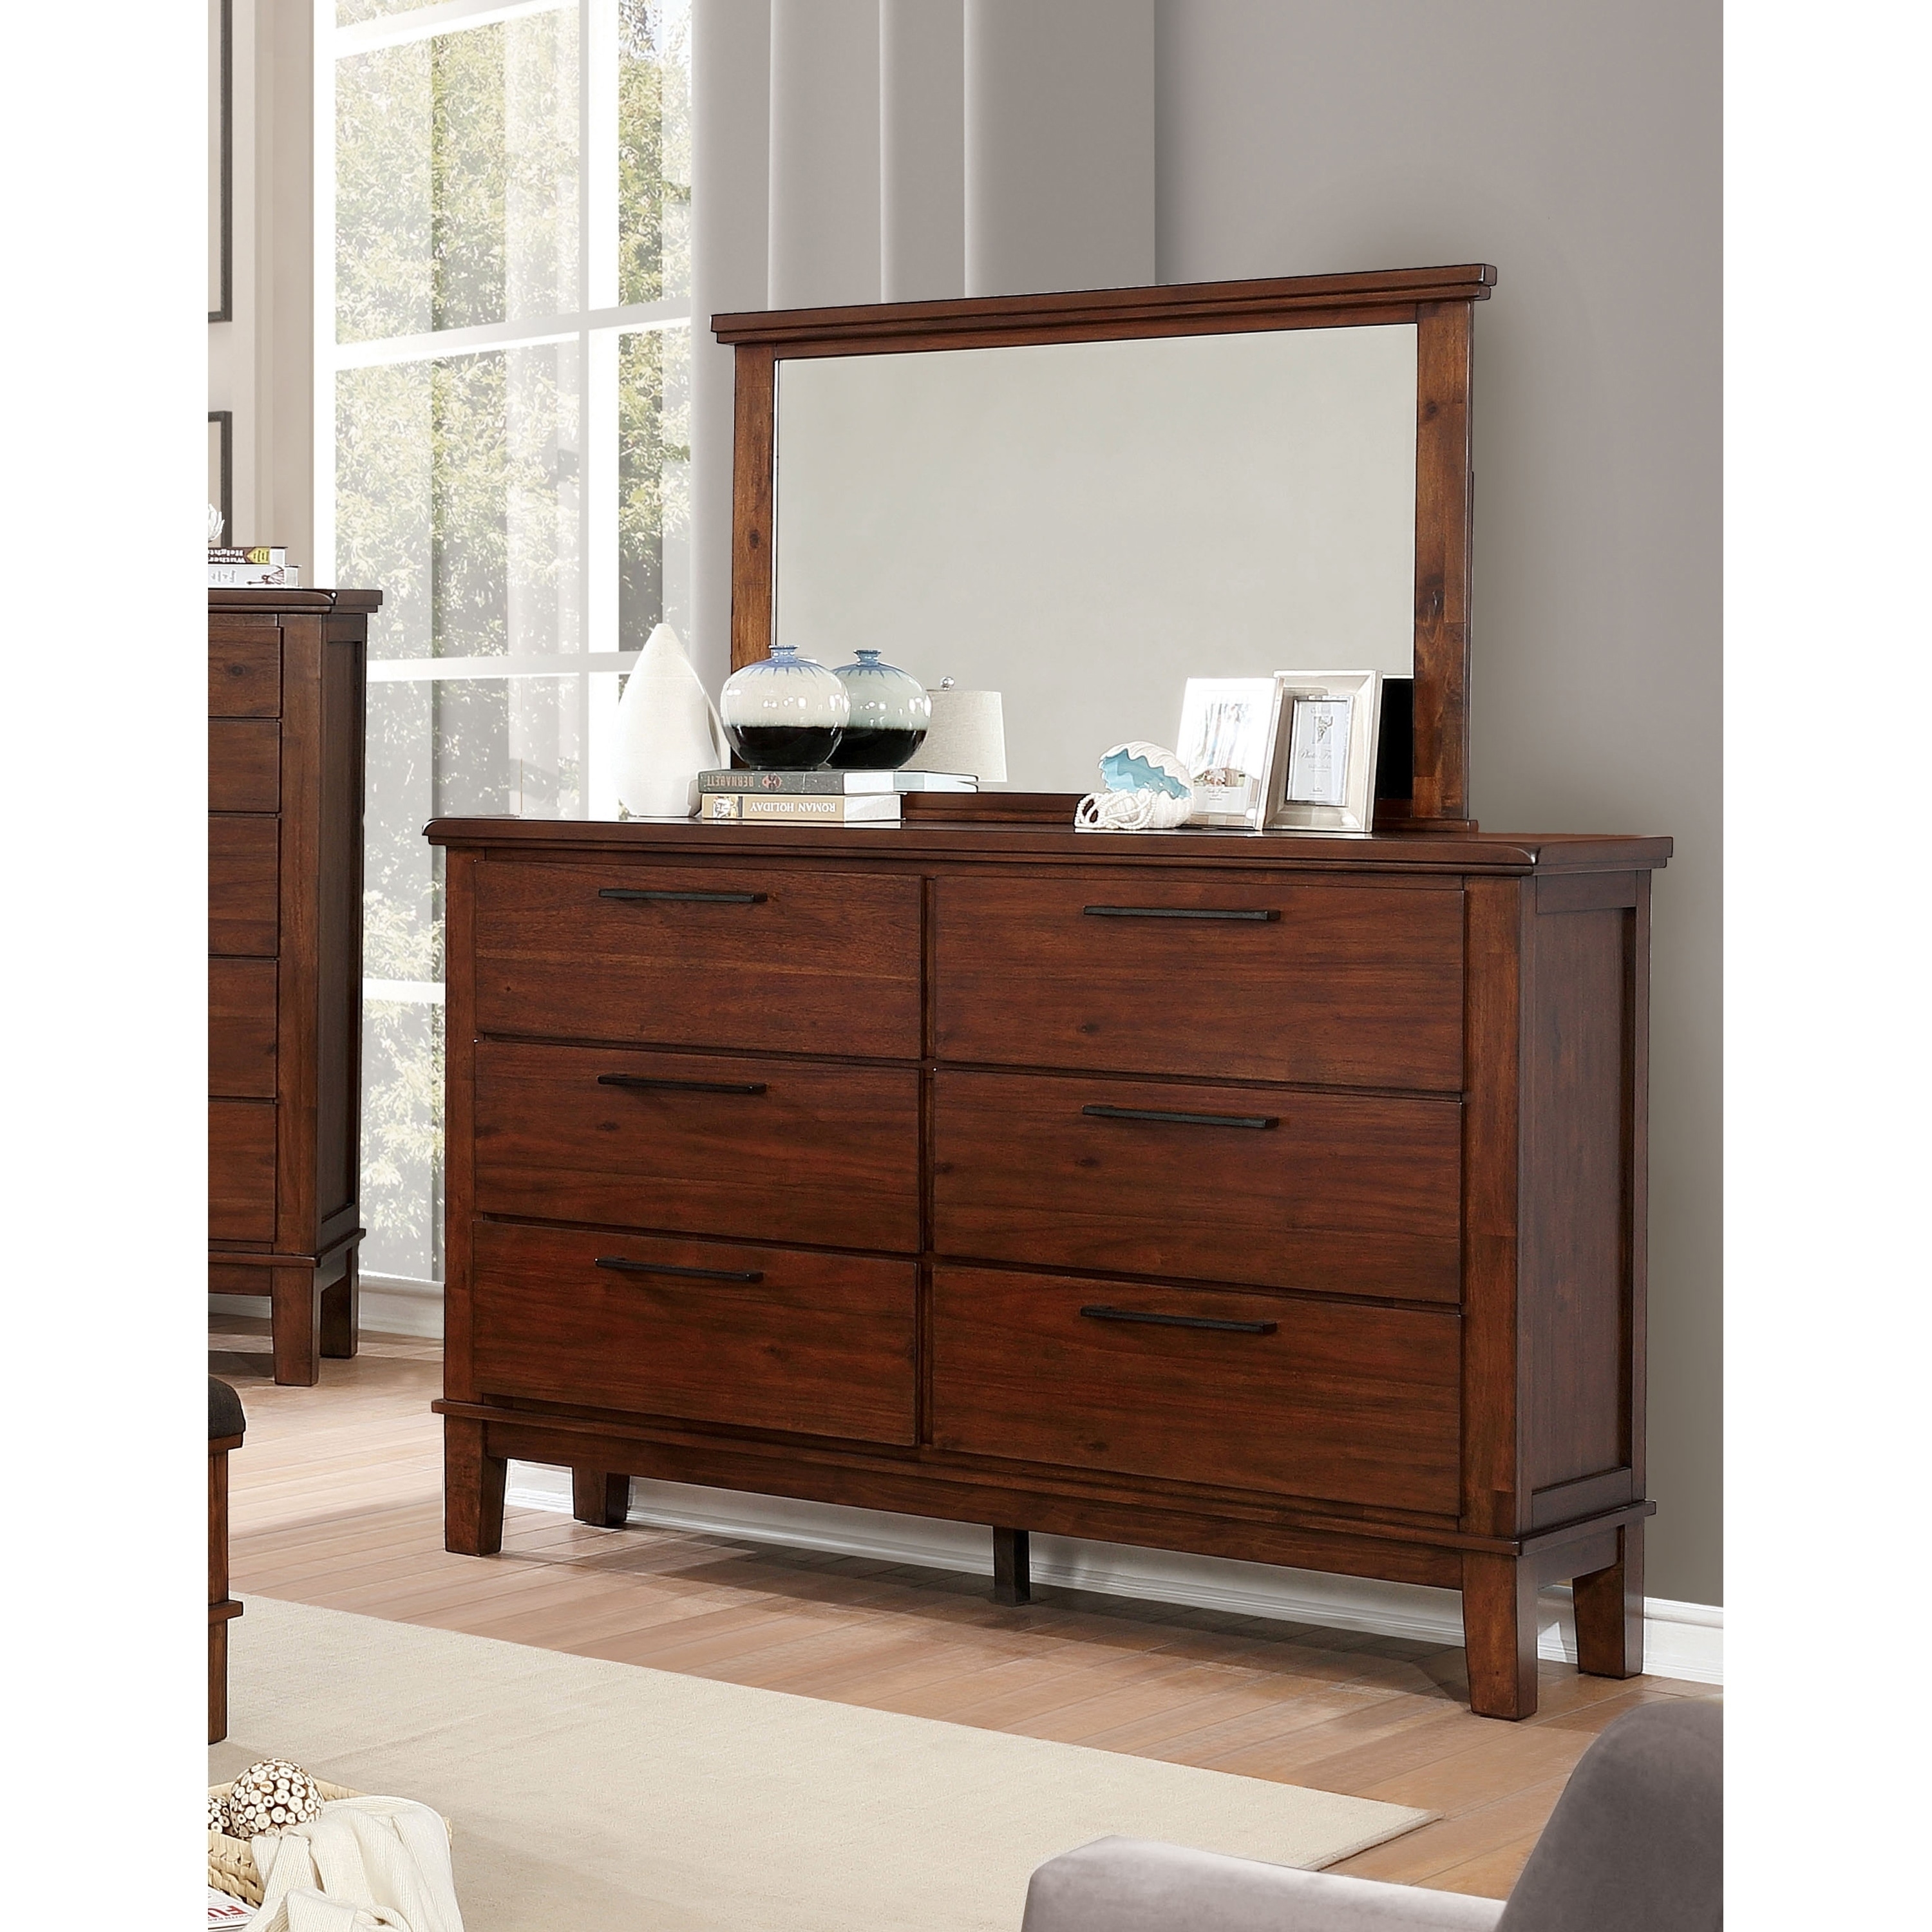 Furniture Of America Tsalka Brown Cherry 2 Piece Dresser And Mirror Set Overstock 28404215